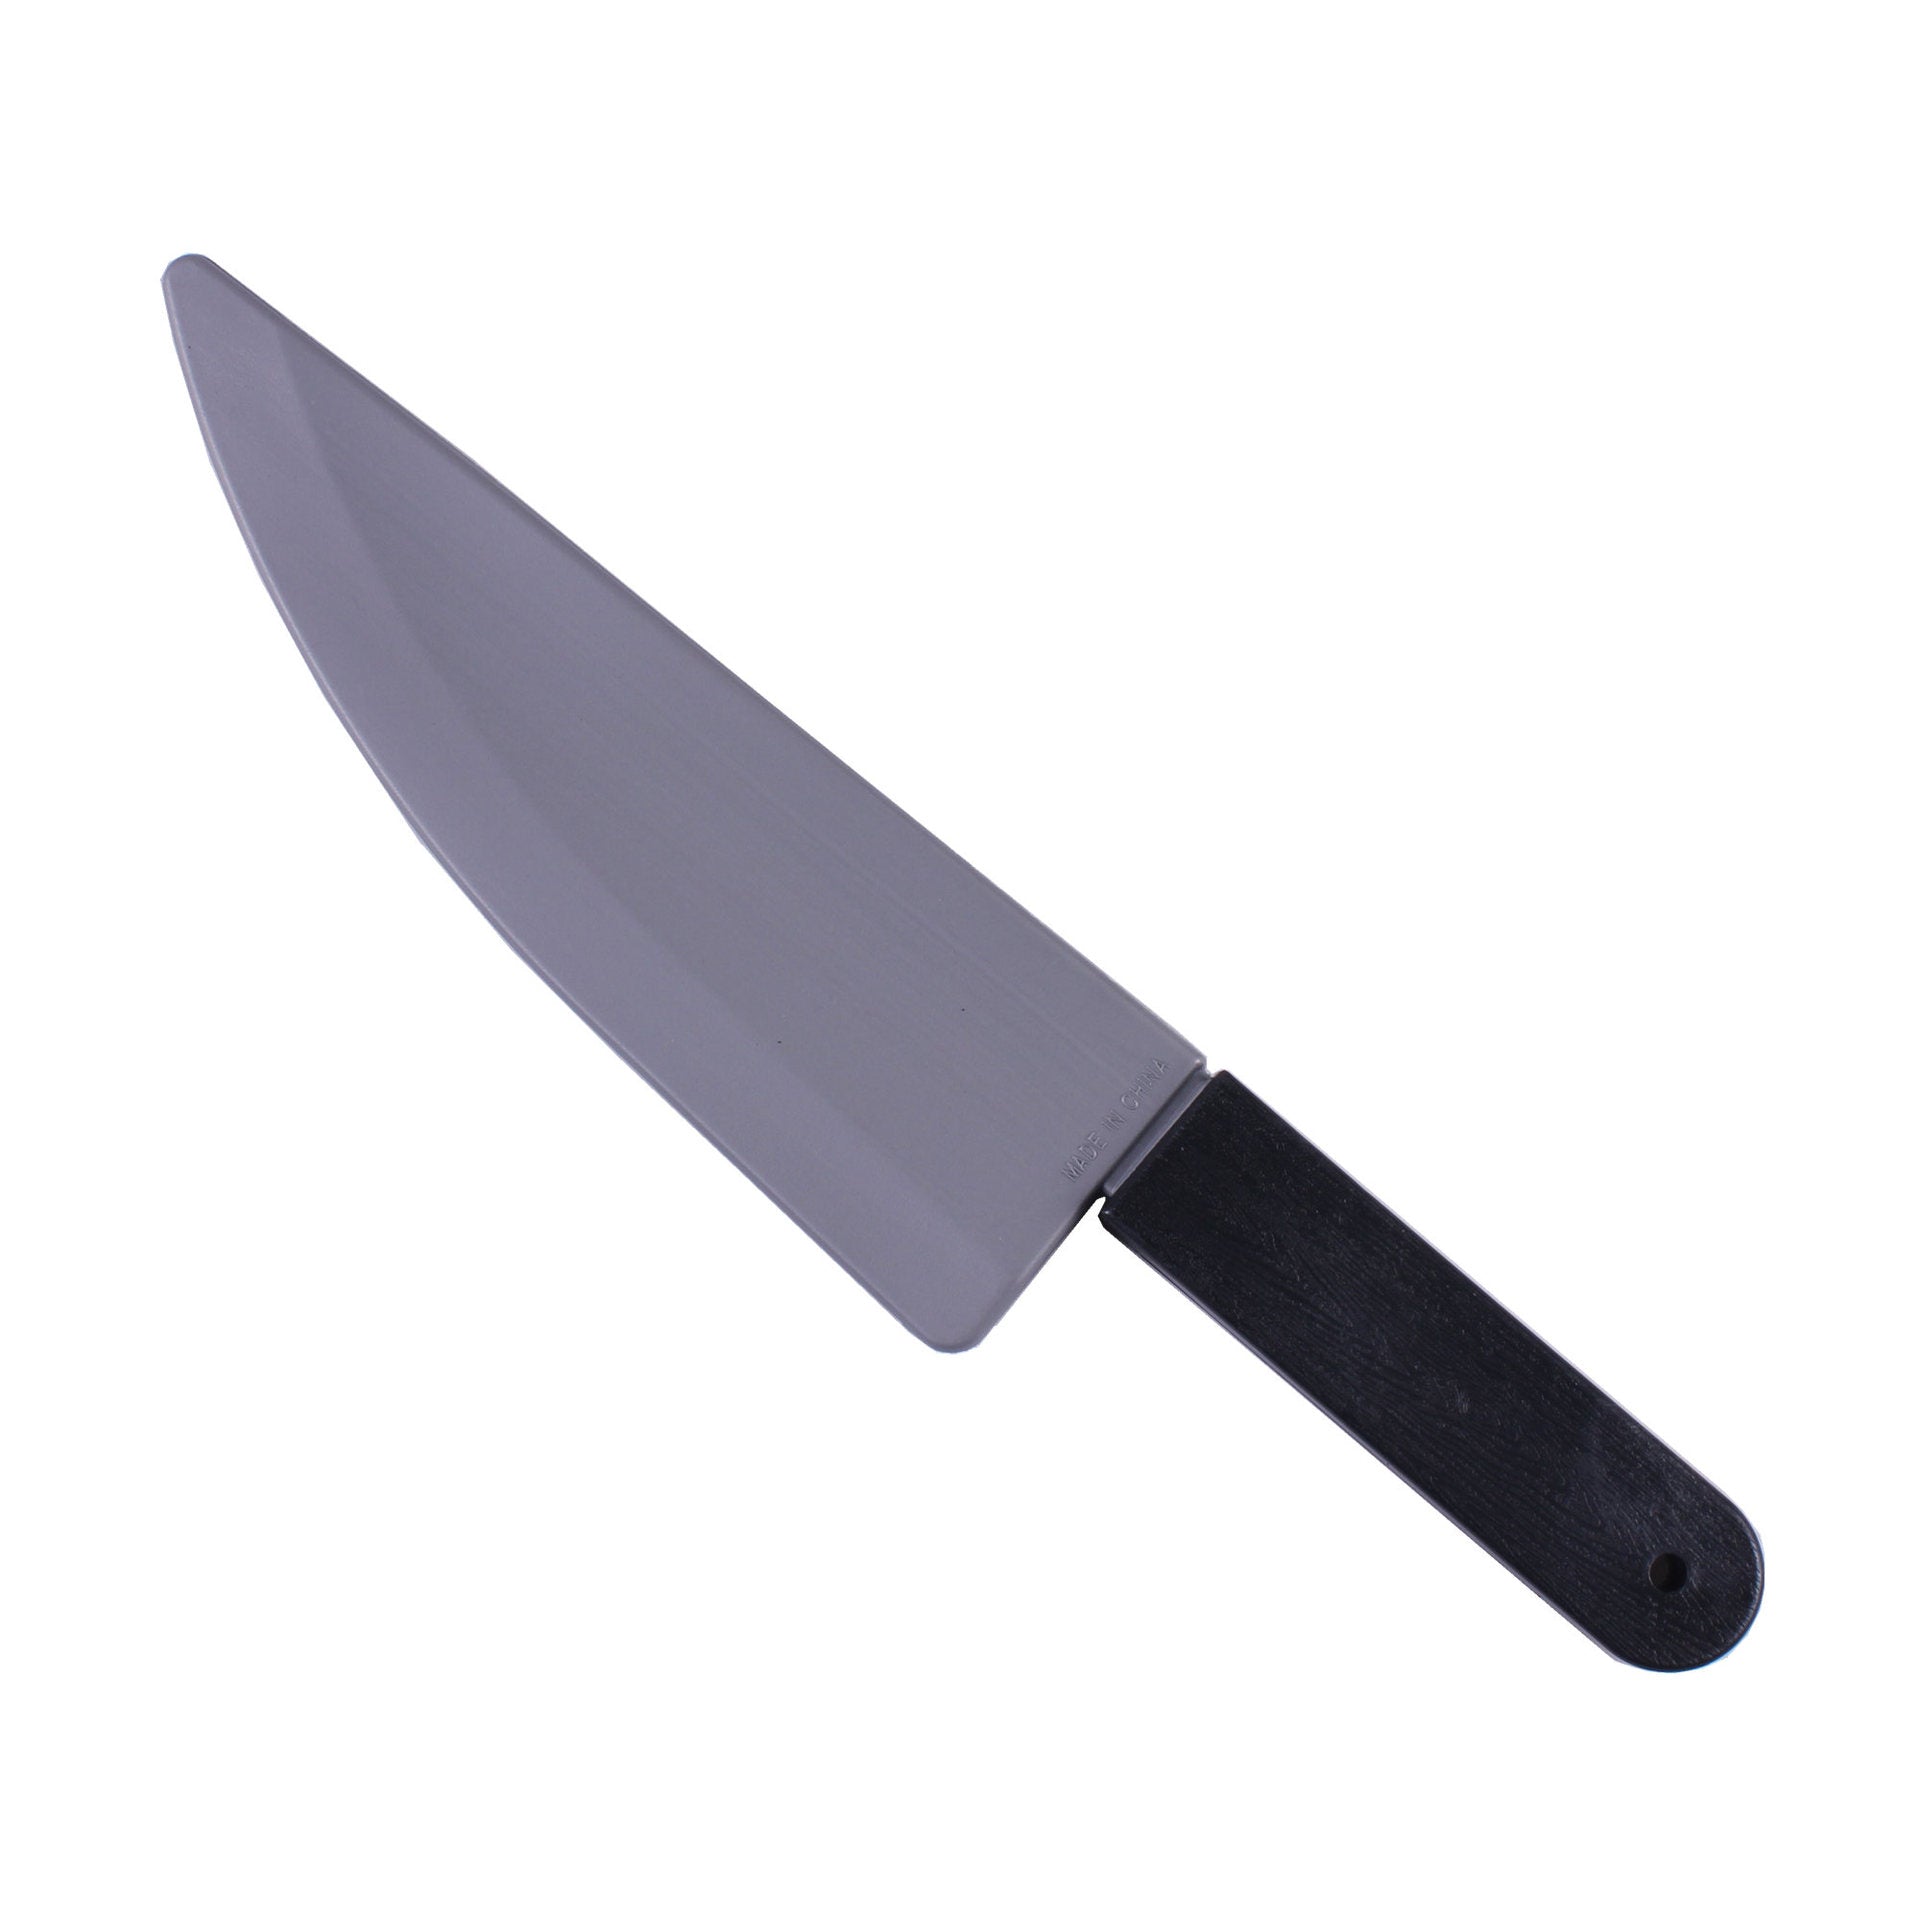 Rulercosplay Undertale Chara Knife Model Game Cosplay Weapon